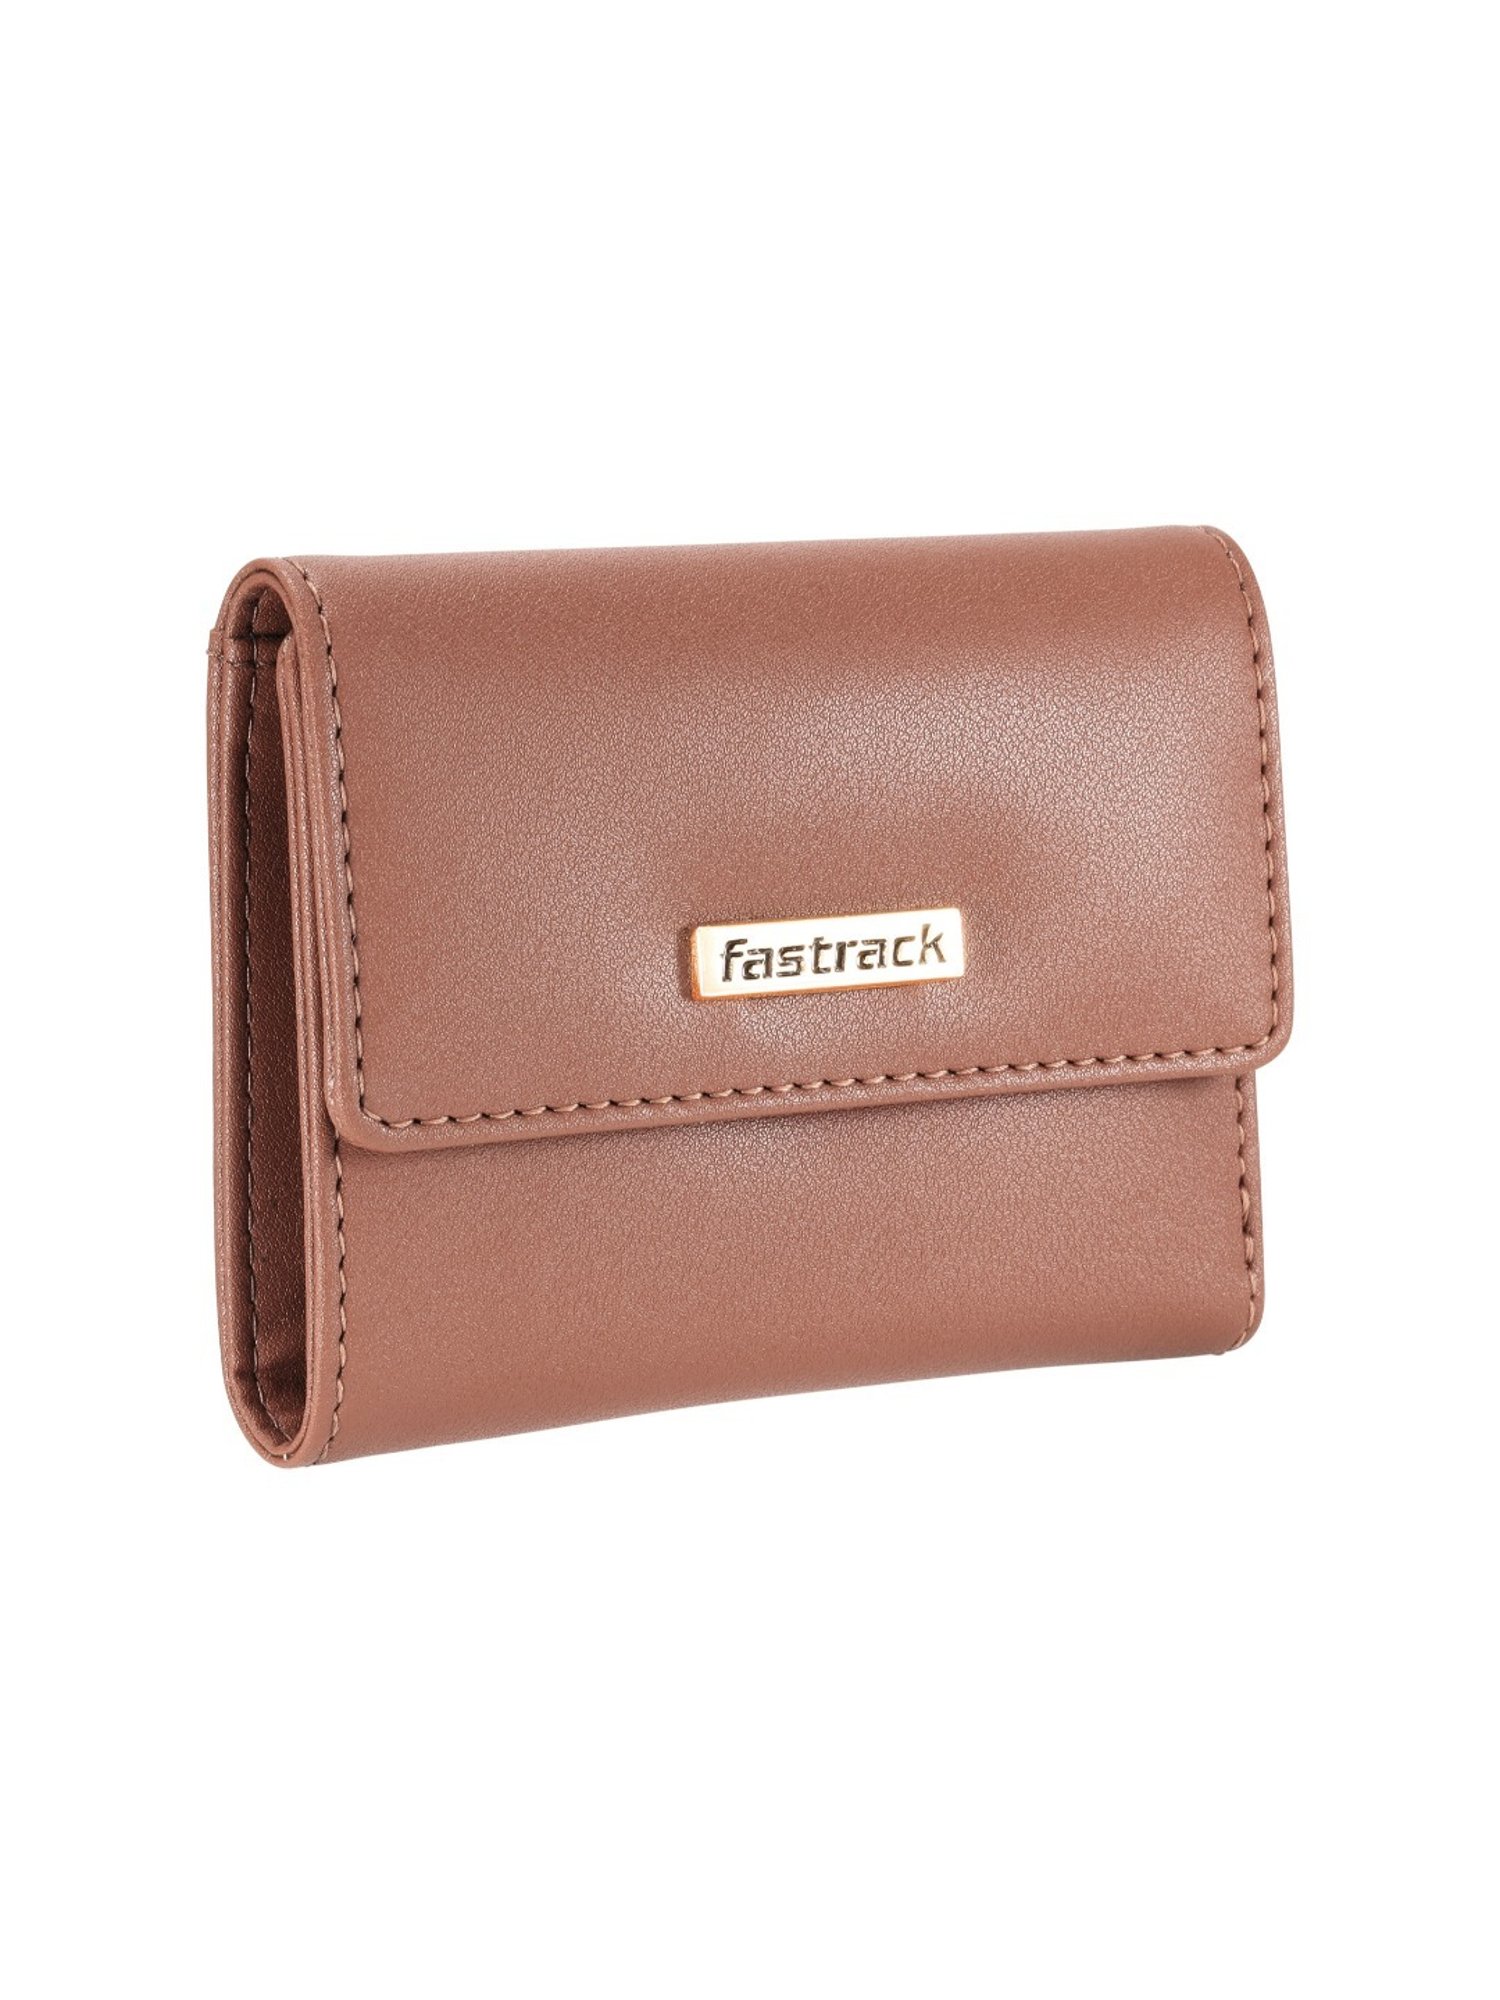 Topshop Handbags, Purses & Wallets for Women | Nordstrom